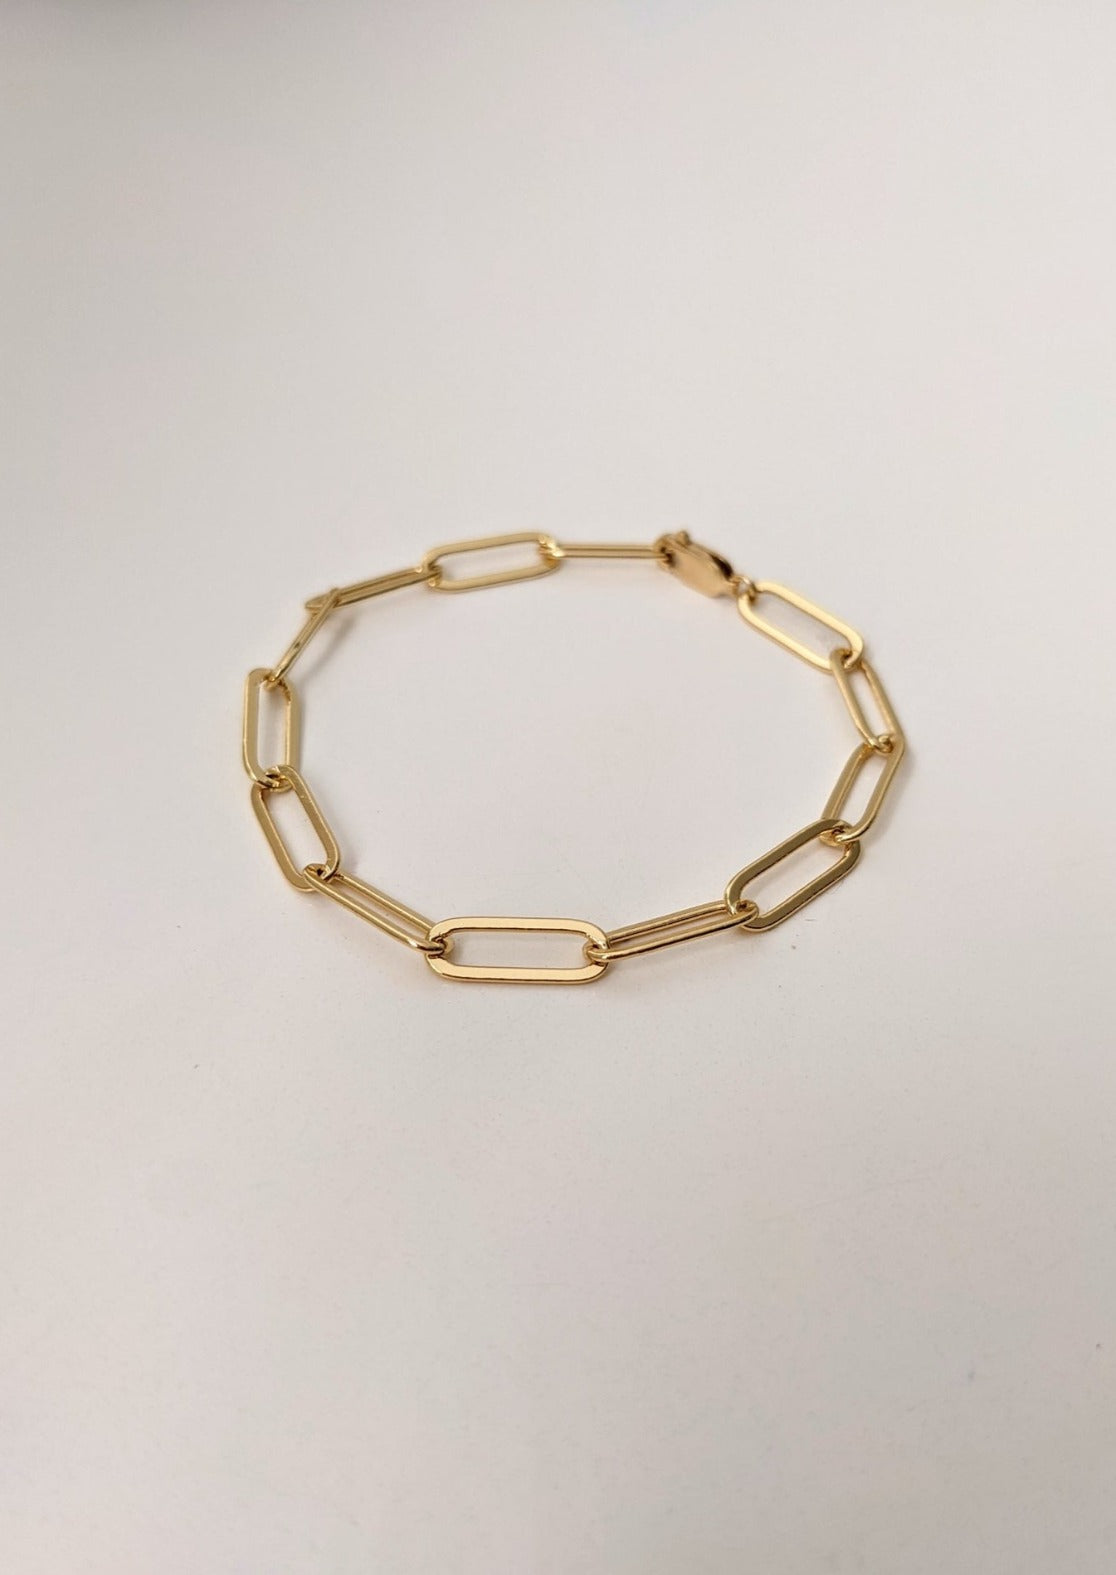 Boyfriend Paperclip Chain Bracelet by Layer the Love